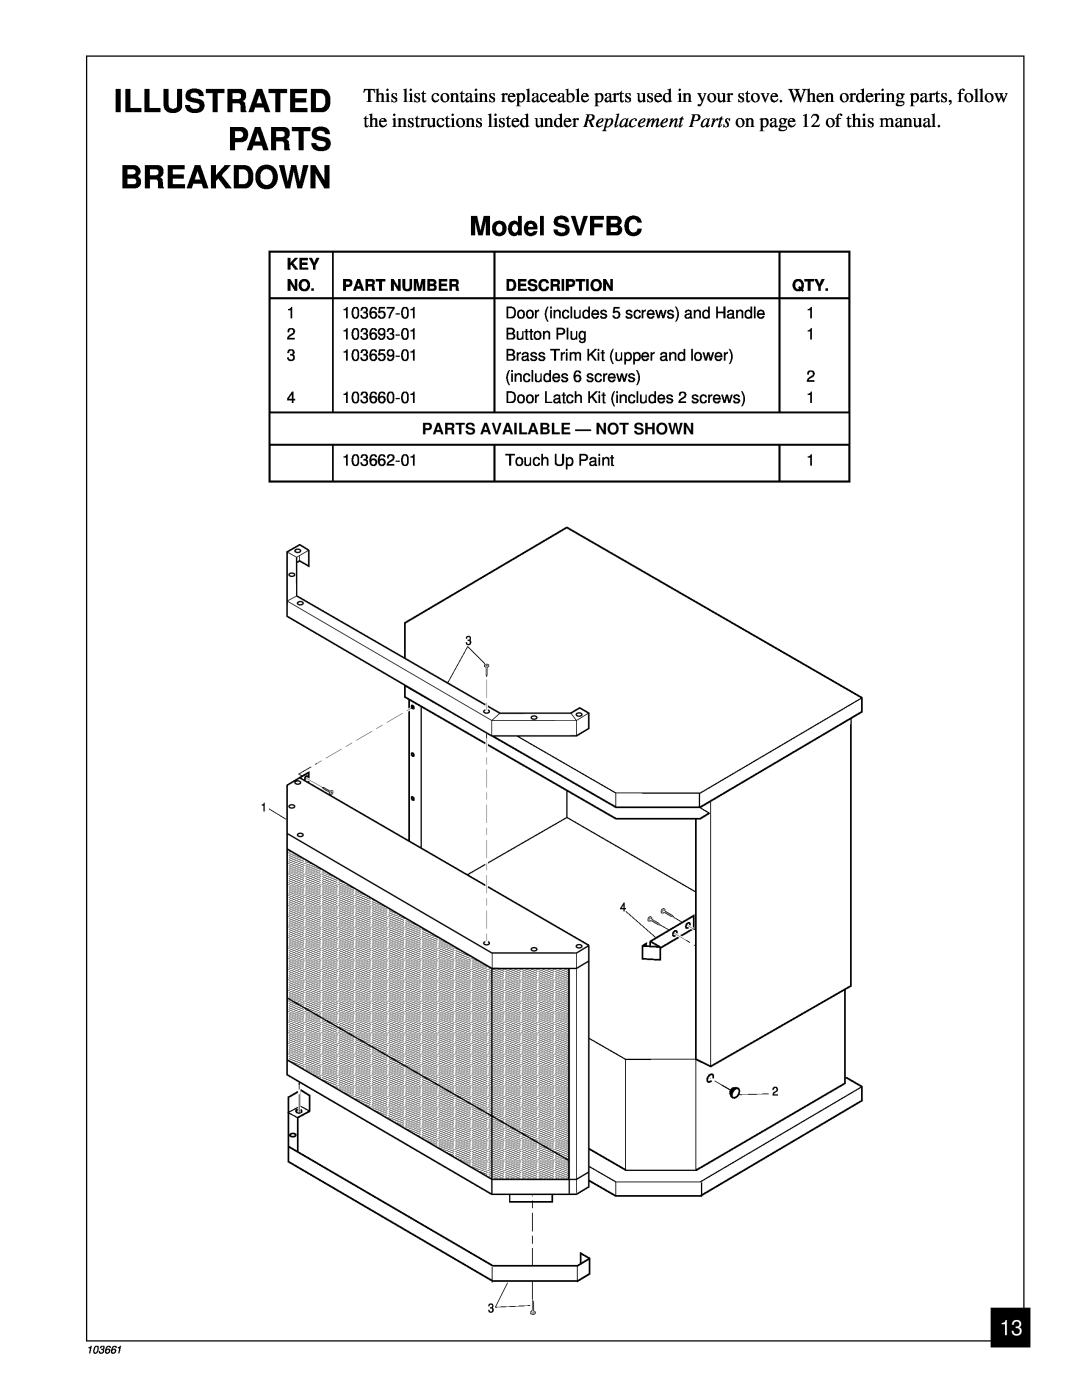 Vanguard Managed Solutions installation manual Illustrated Parts Breakdown, Model SVFBC, Part Number, Description 